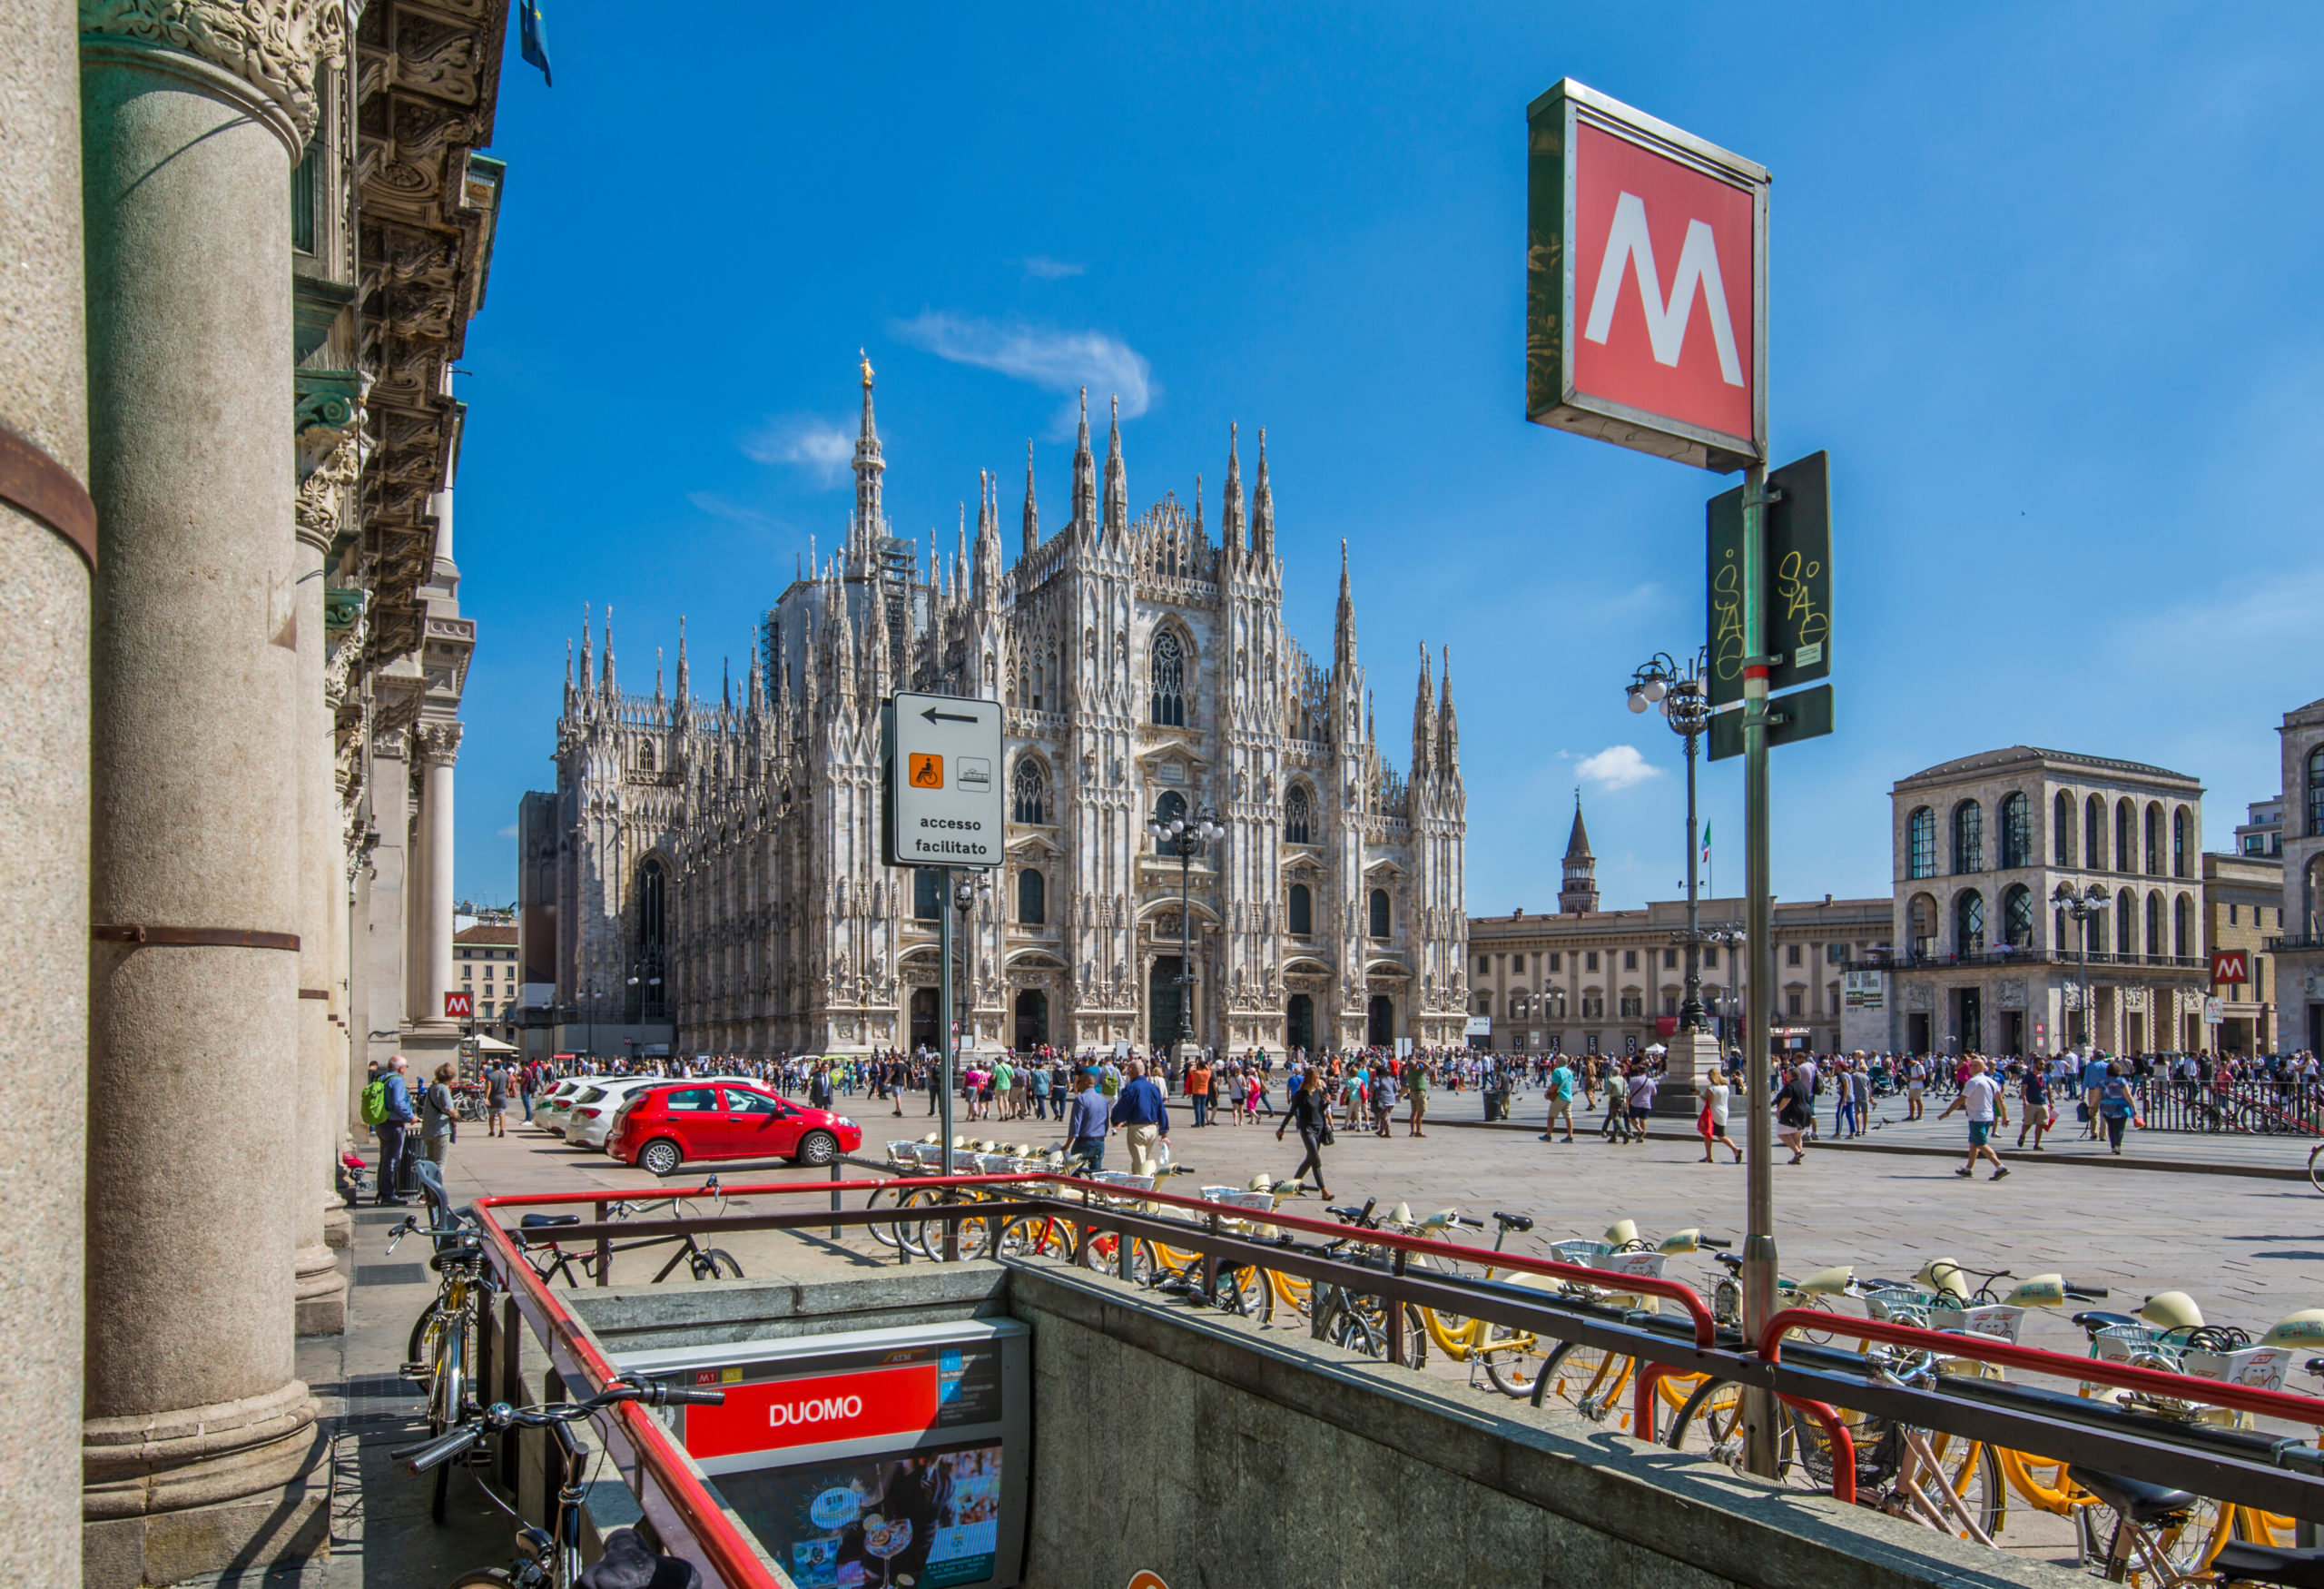 Crisis pushes fashion city Milan to become ‘cycling city’